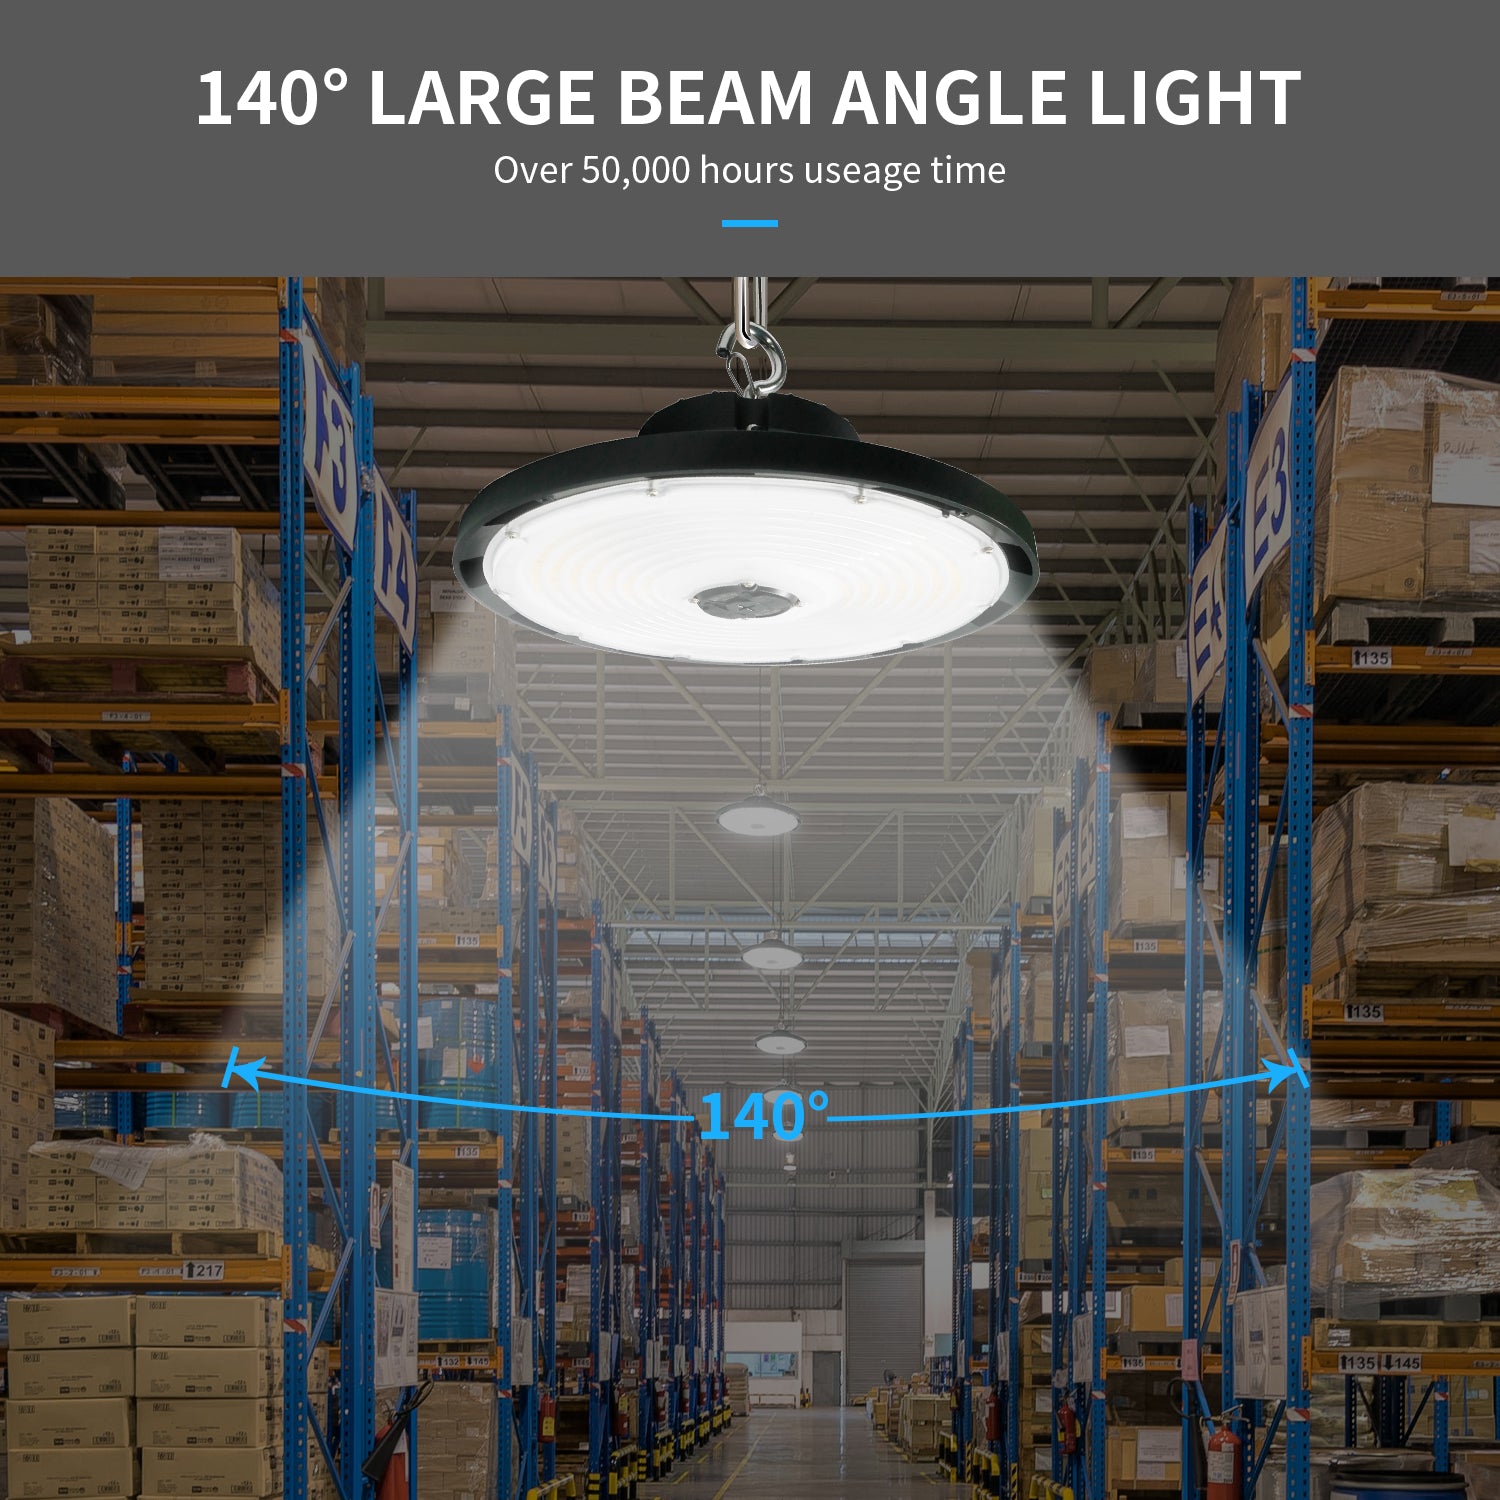 UFO lights,140° large beam angle